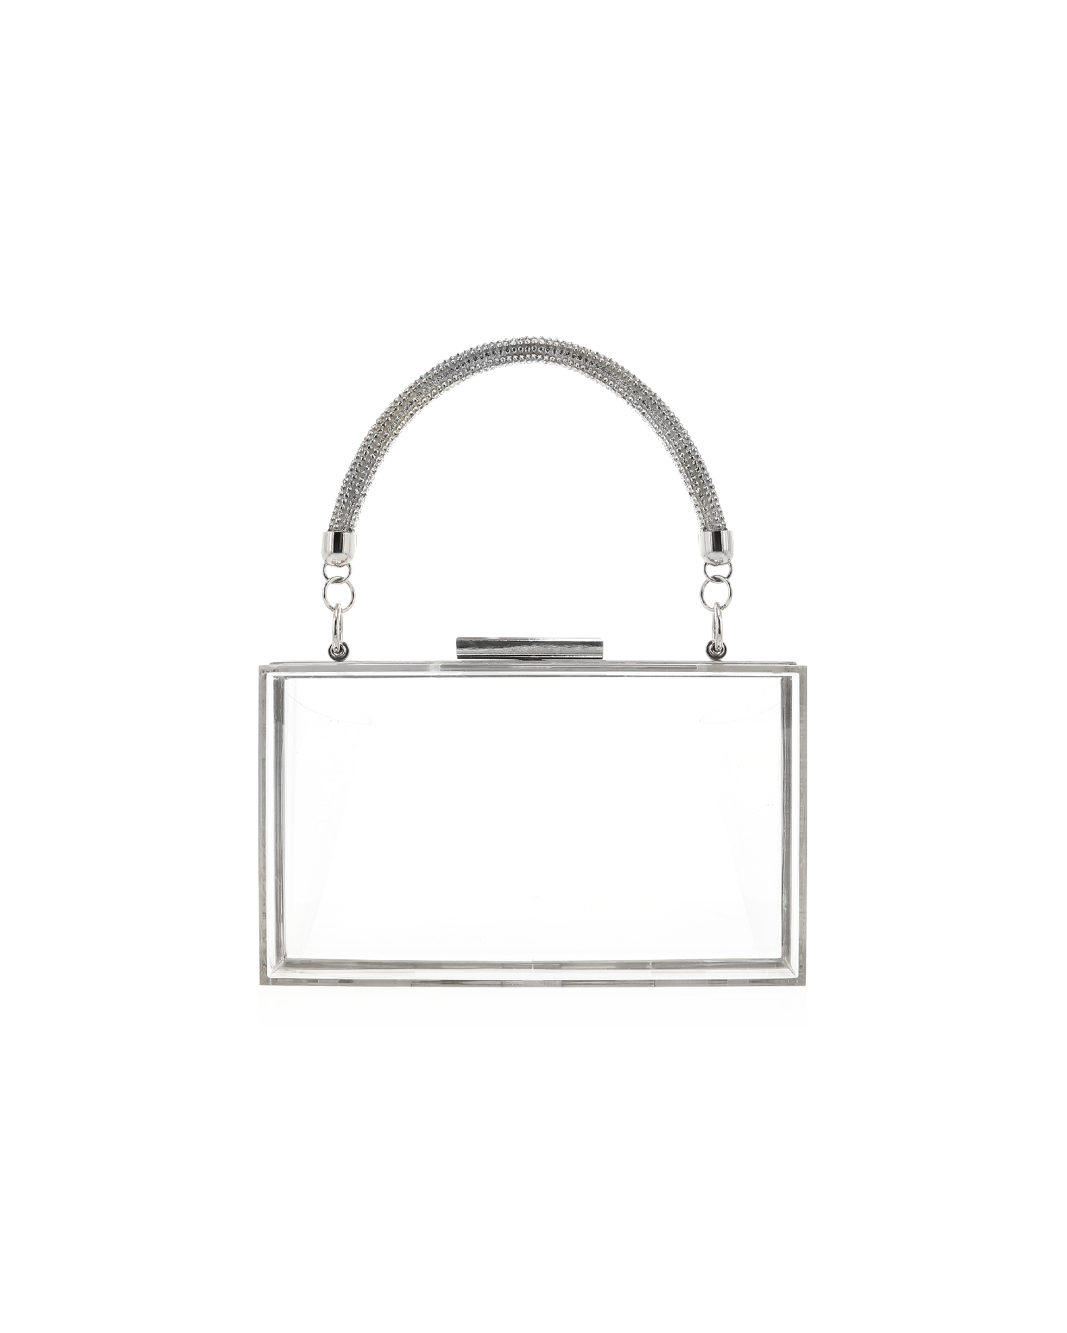 DODAMOUR Clear Purse Acrylic Clutch Bag for Women, Square Transparent  Crossbody Evening Bag with Adjustable Long Shoulder Strap - Walmart.com